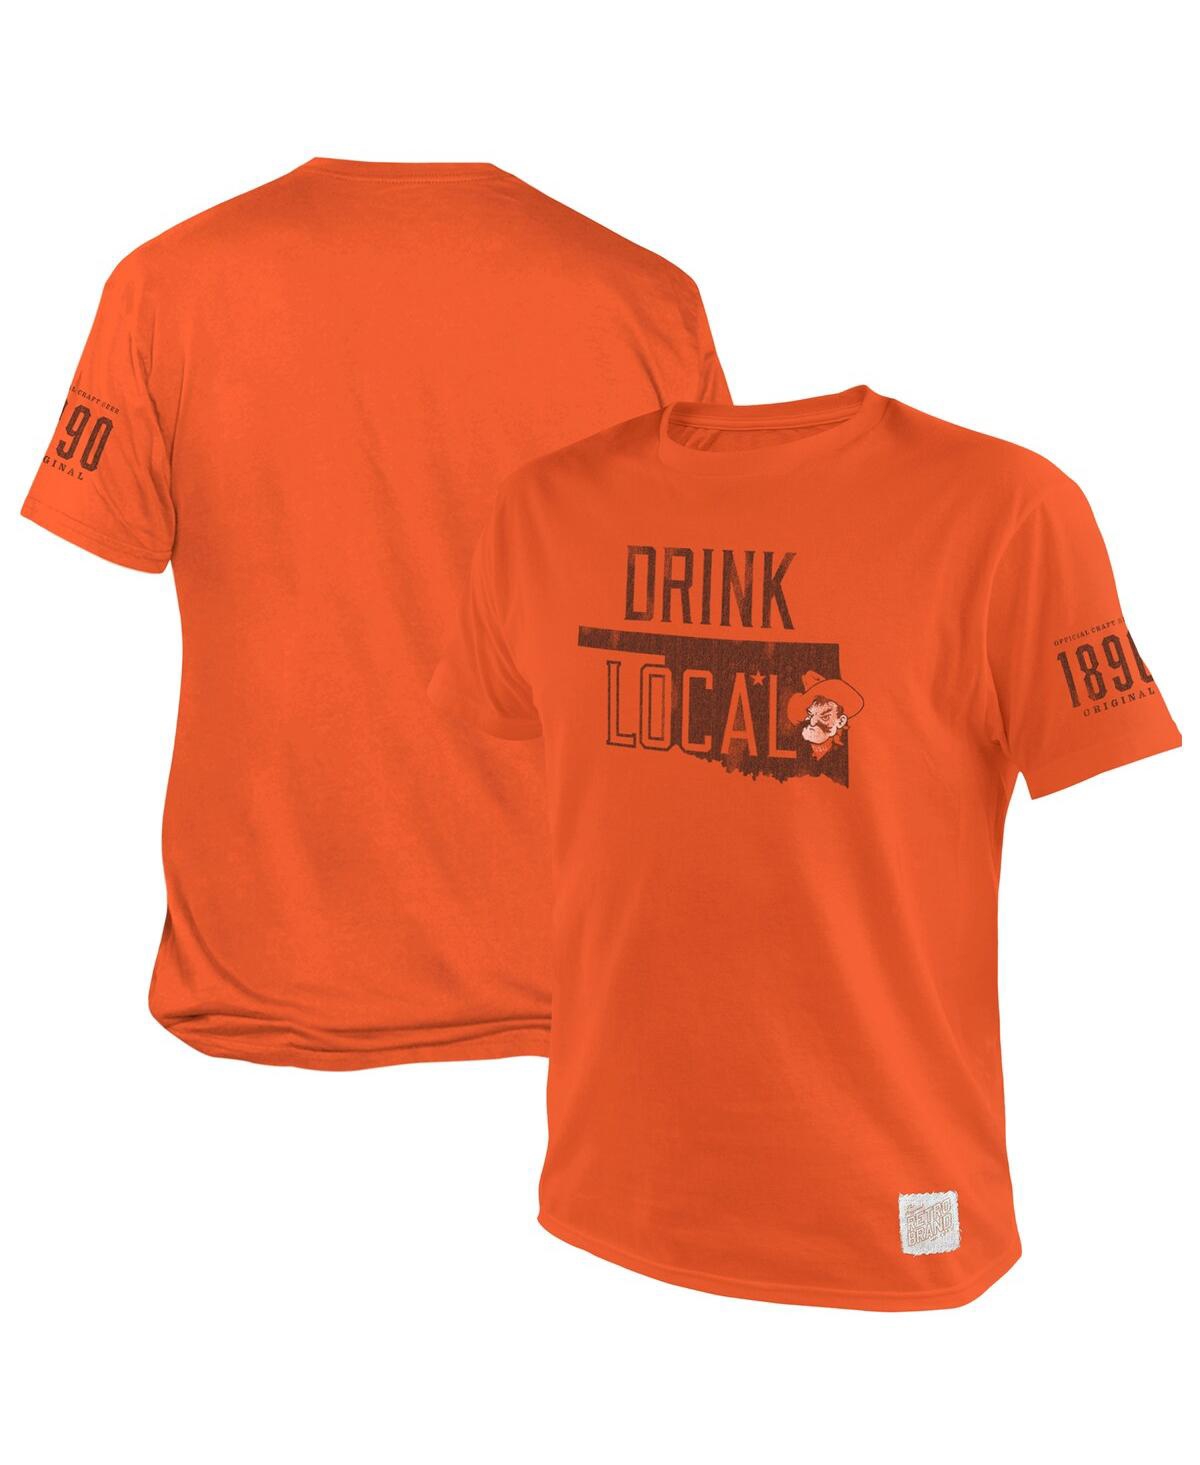 Men's Original Retro Brand Orange Oklahoma State Cowboys 1890 Original Drink Local T-shirt - Orange